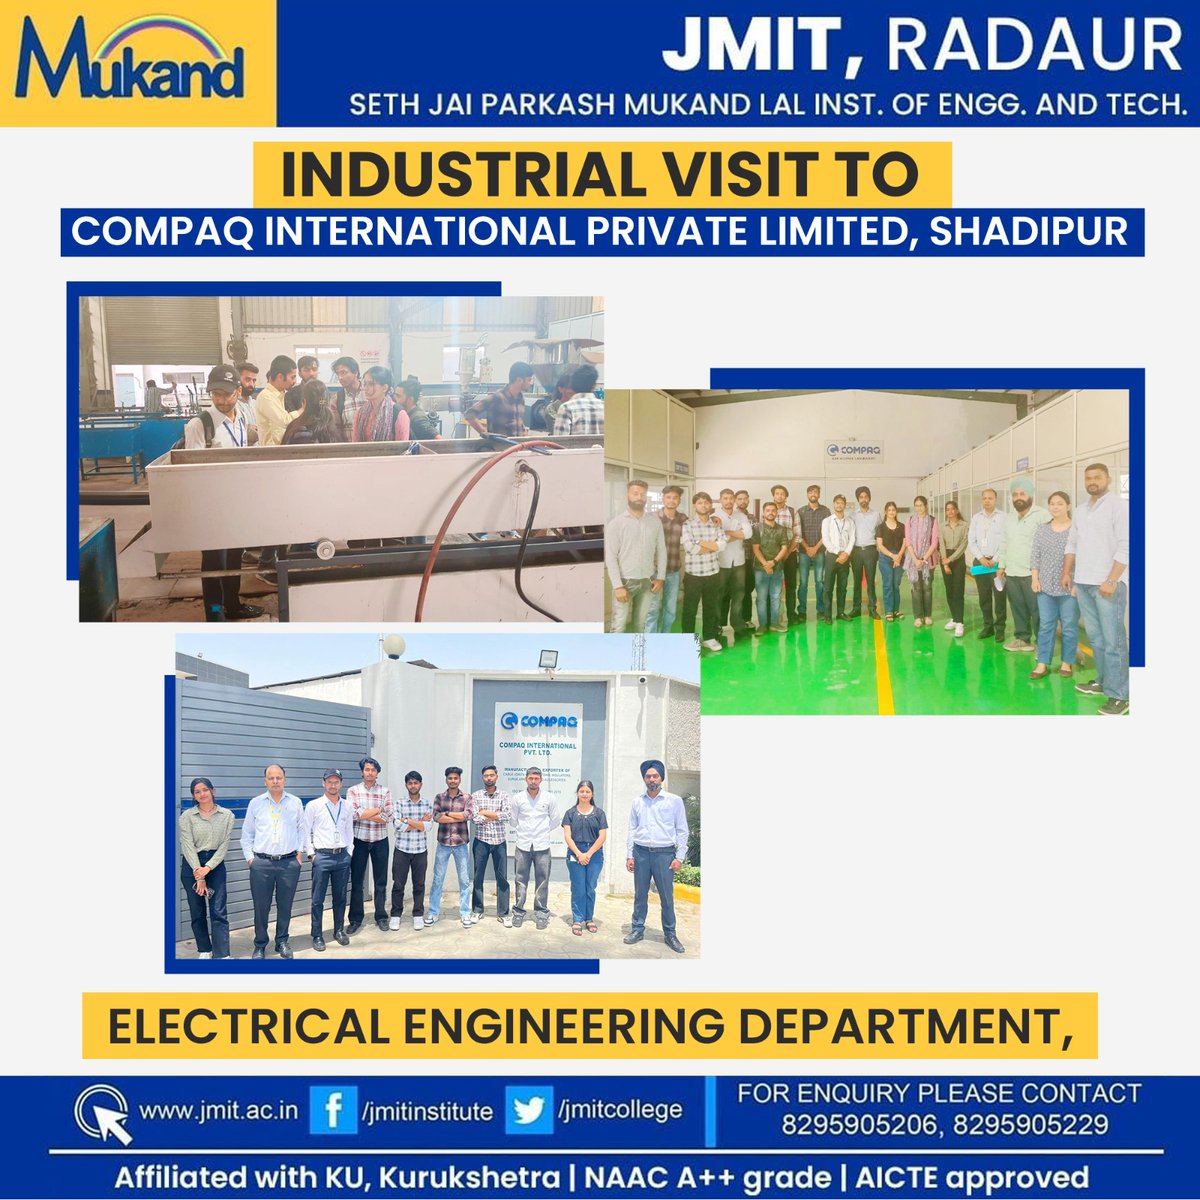 JMIT's electrical engineering students exploring industry insights at Compaq International Pvt. Ltd., Shadipur! 

 #IndustrialVisit #jmit #jmitradaur